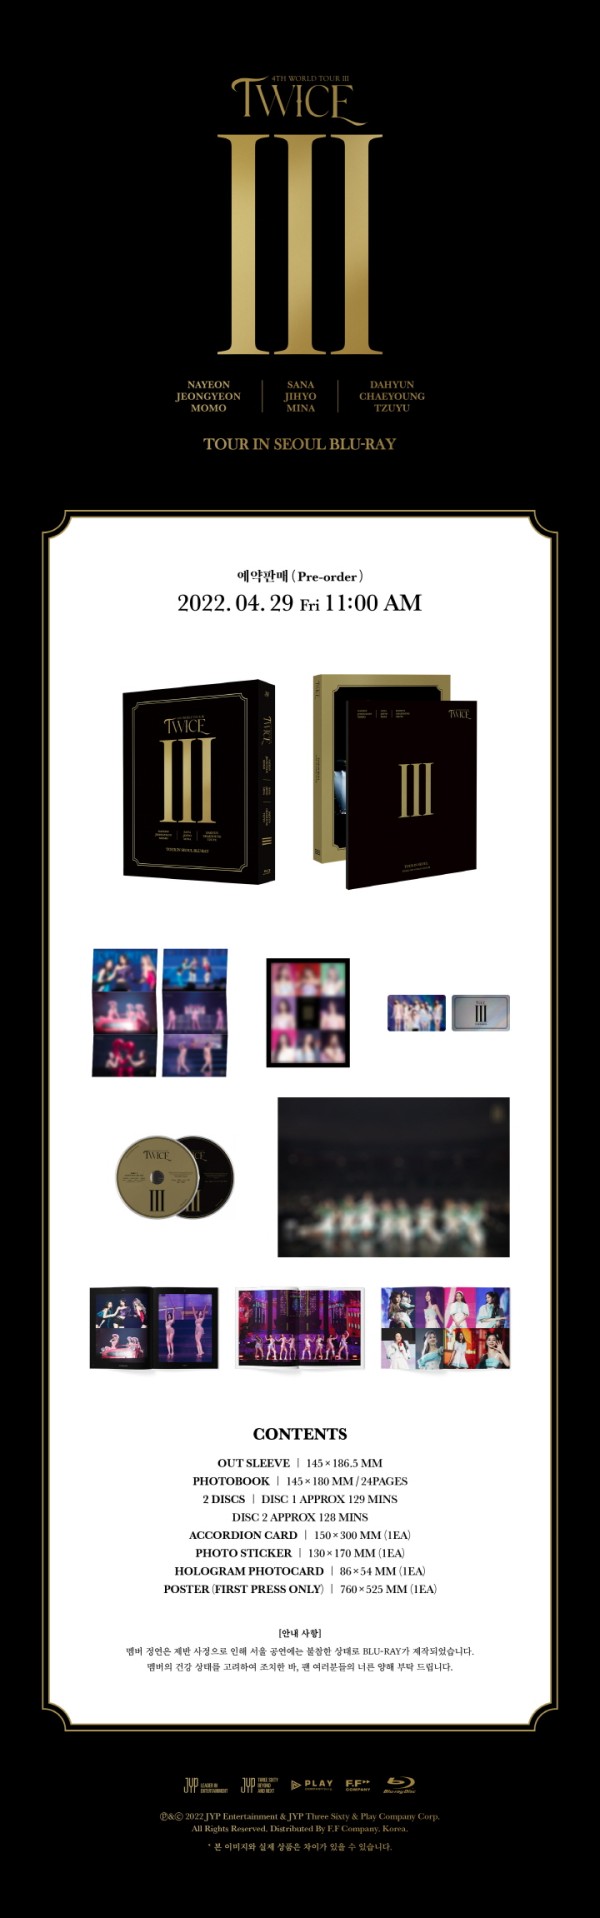 TWICE 4TH WORLD TOUR Ⅲ IN SEOUL Blu-rayトレカ - ミュージック